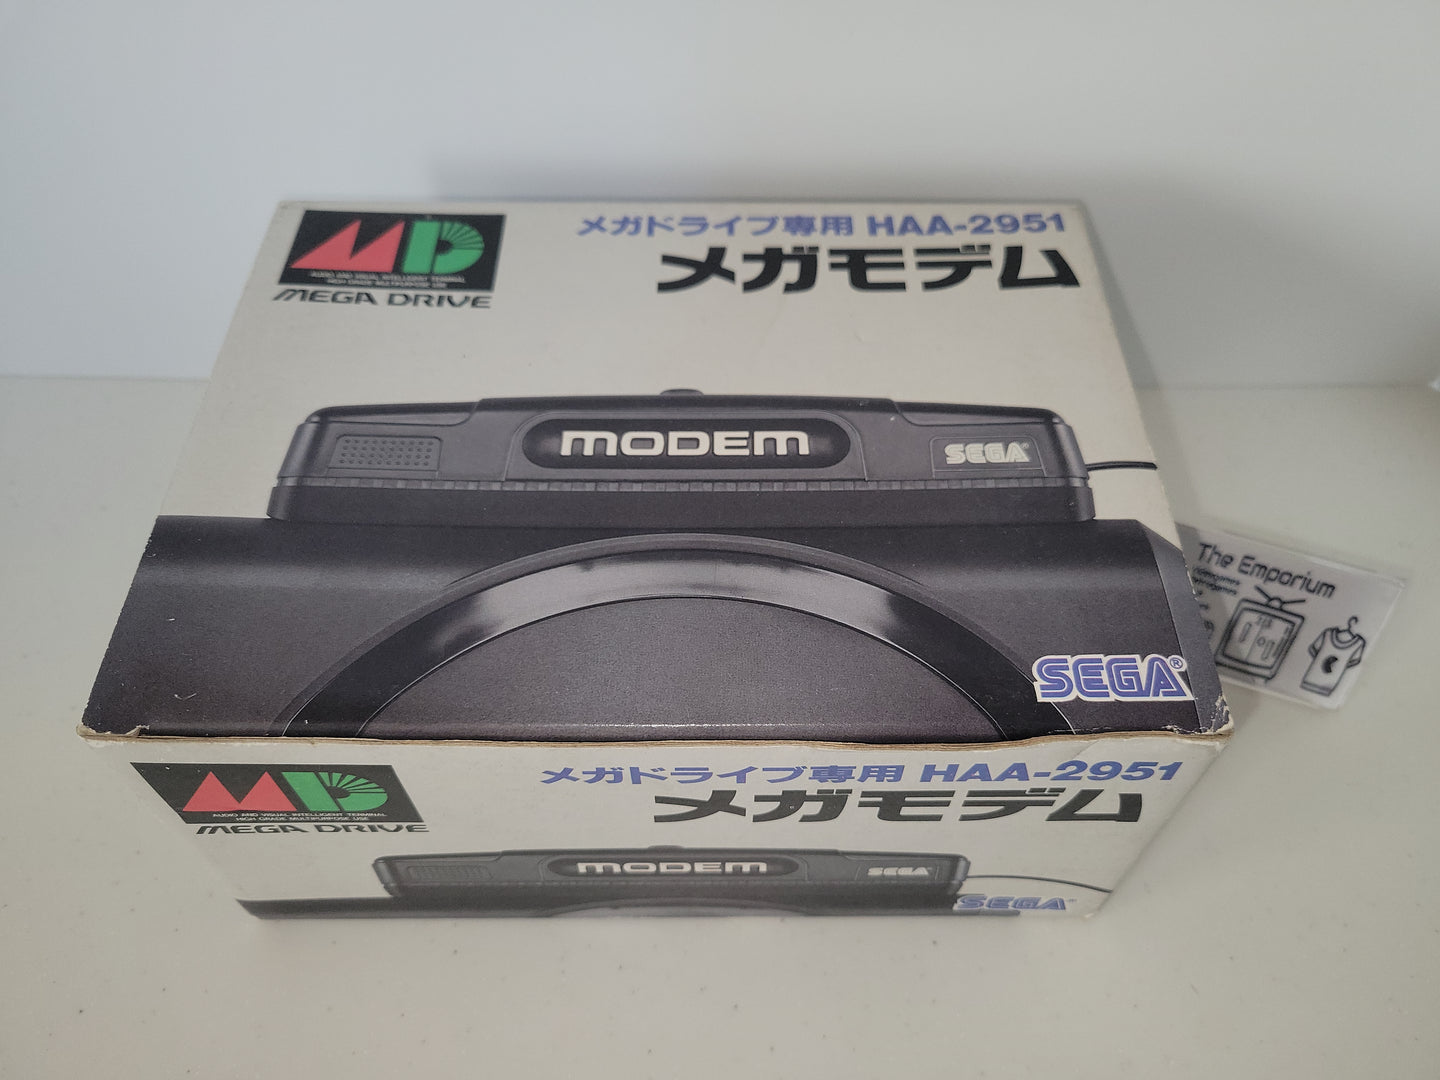 sega MEGA MODEM HAA-2951 - Sega MD MegaDrive